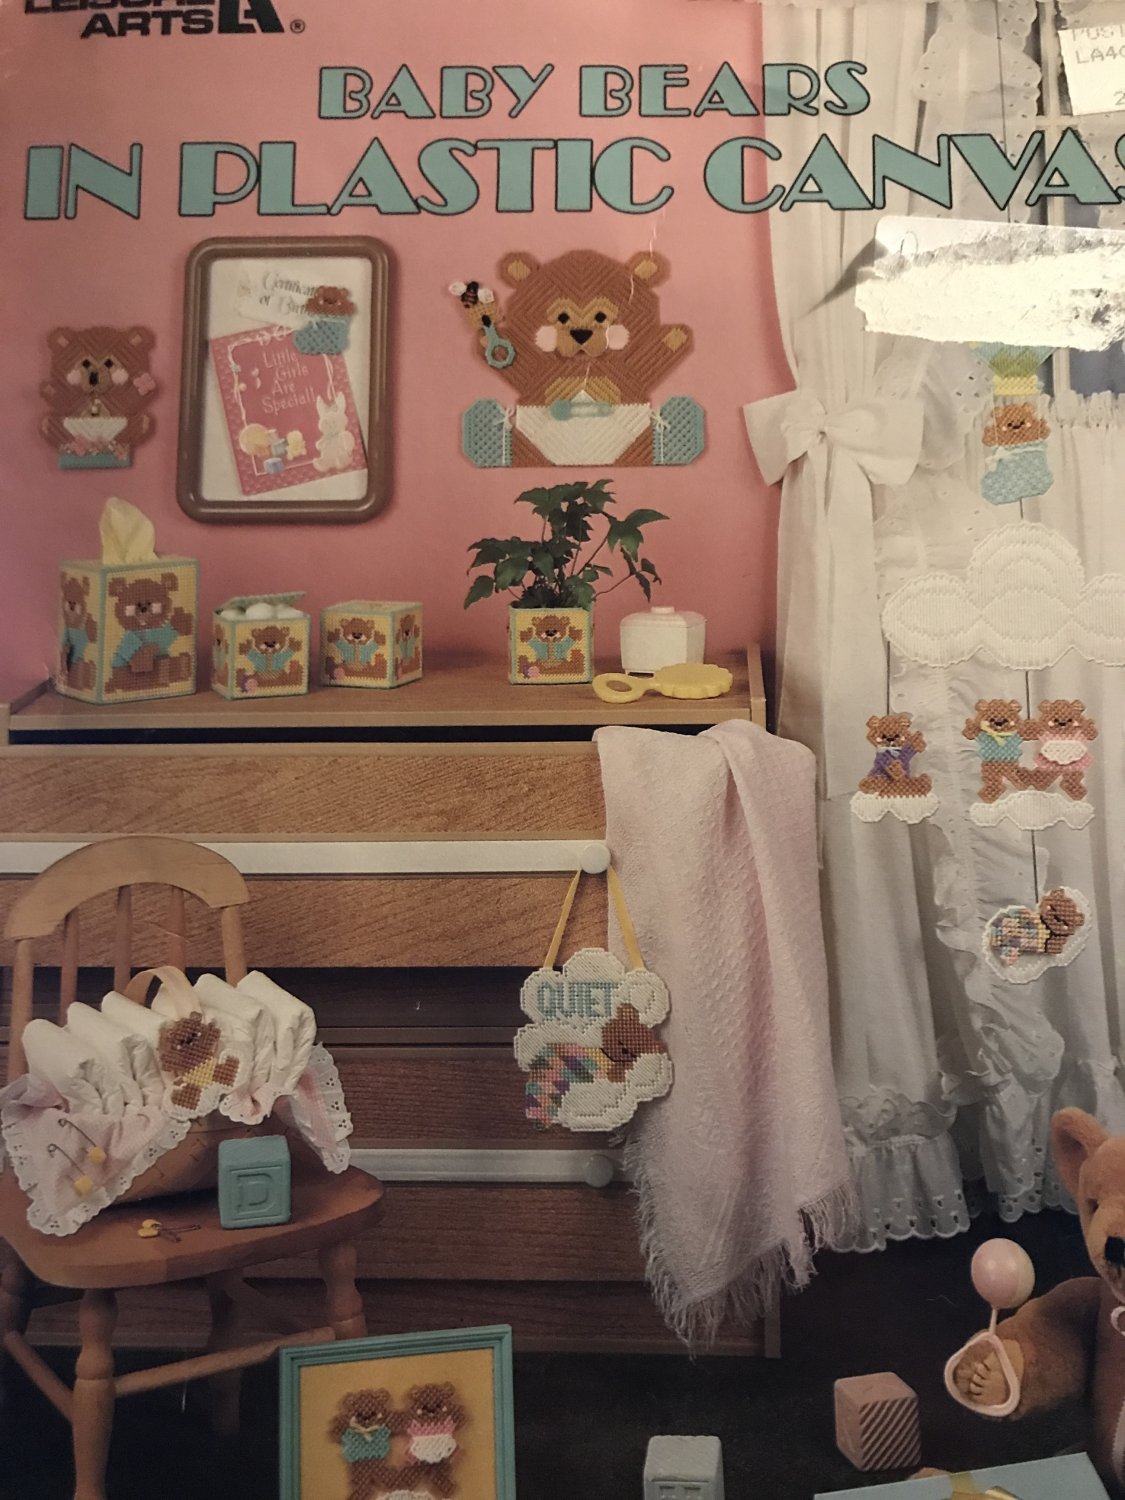 Leisure Arts 408 Baby Bears in Plastic Canvas Pattern Baby room Nursery decor